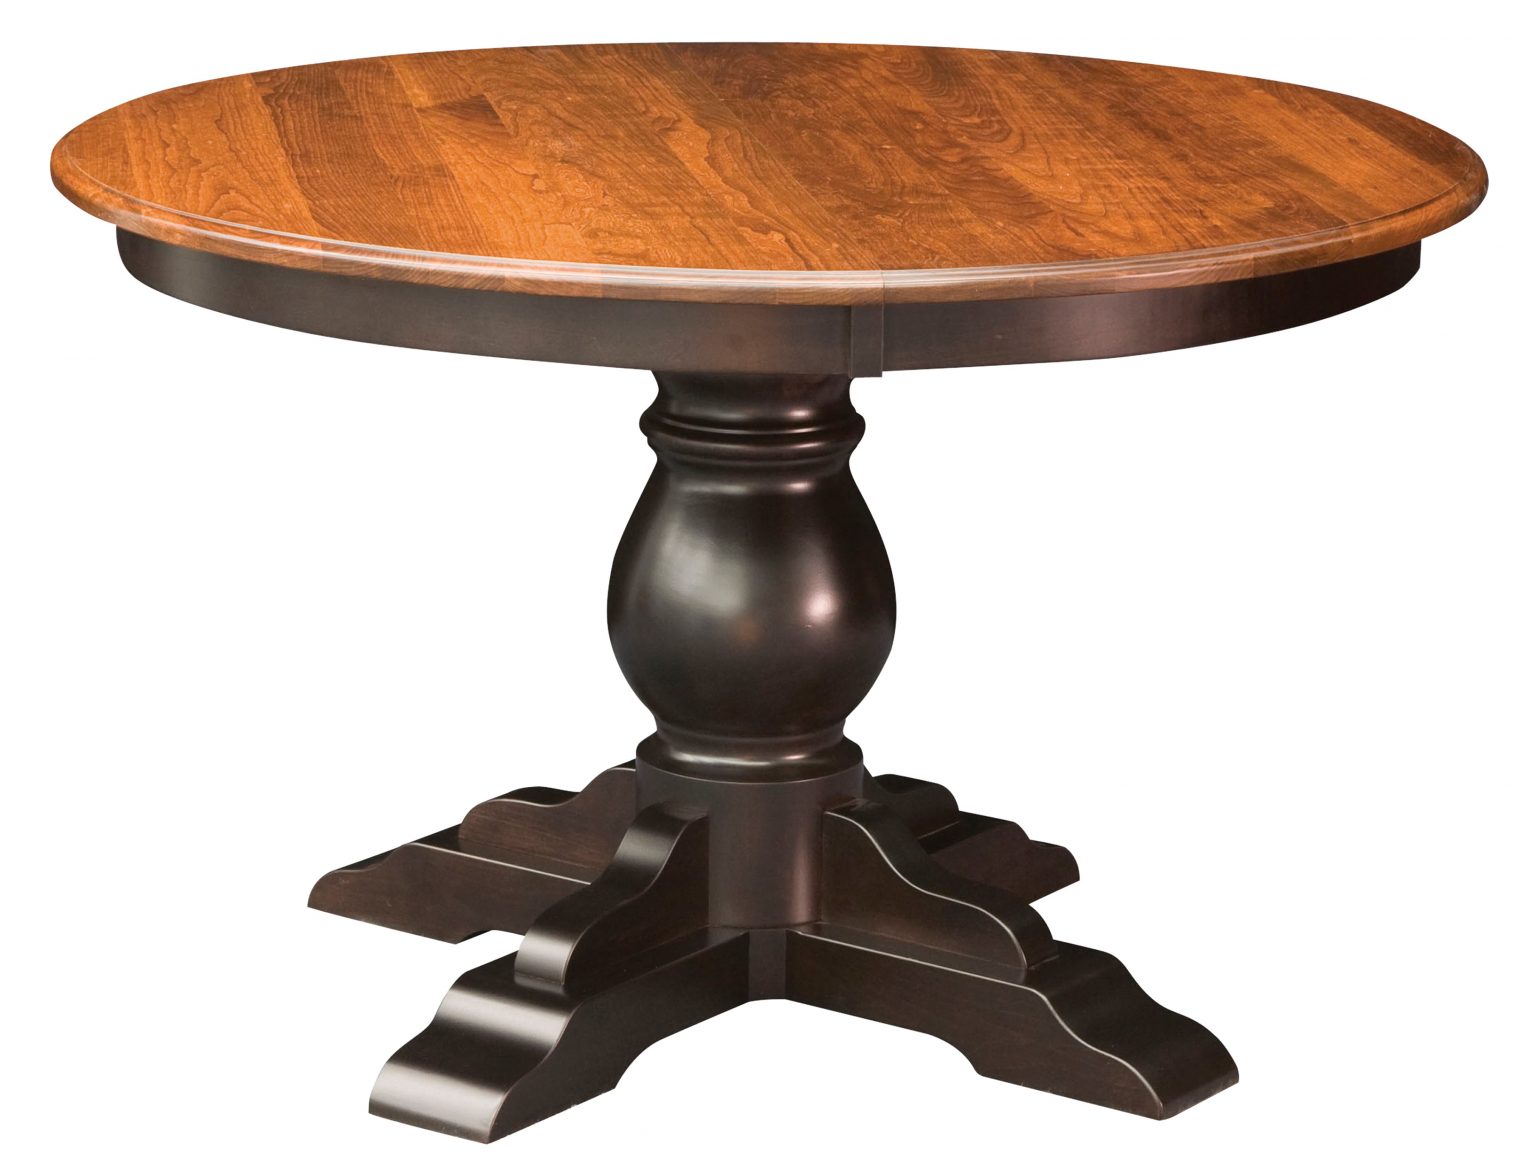 48 inch round kitchen table ashley furniture